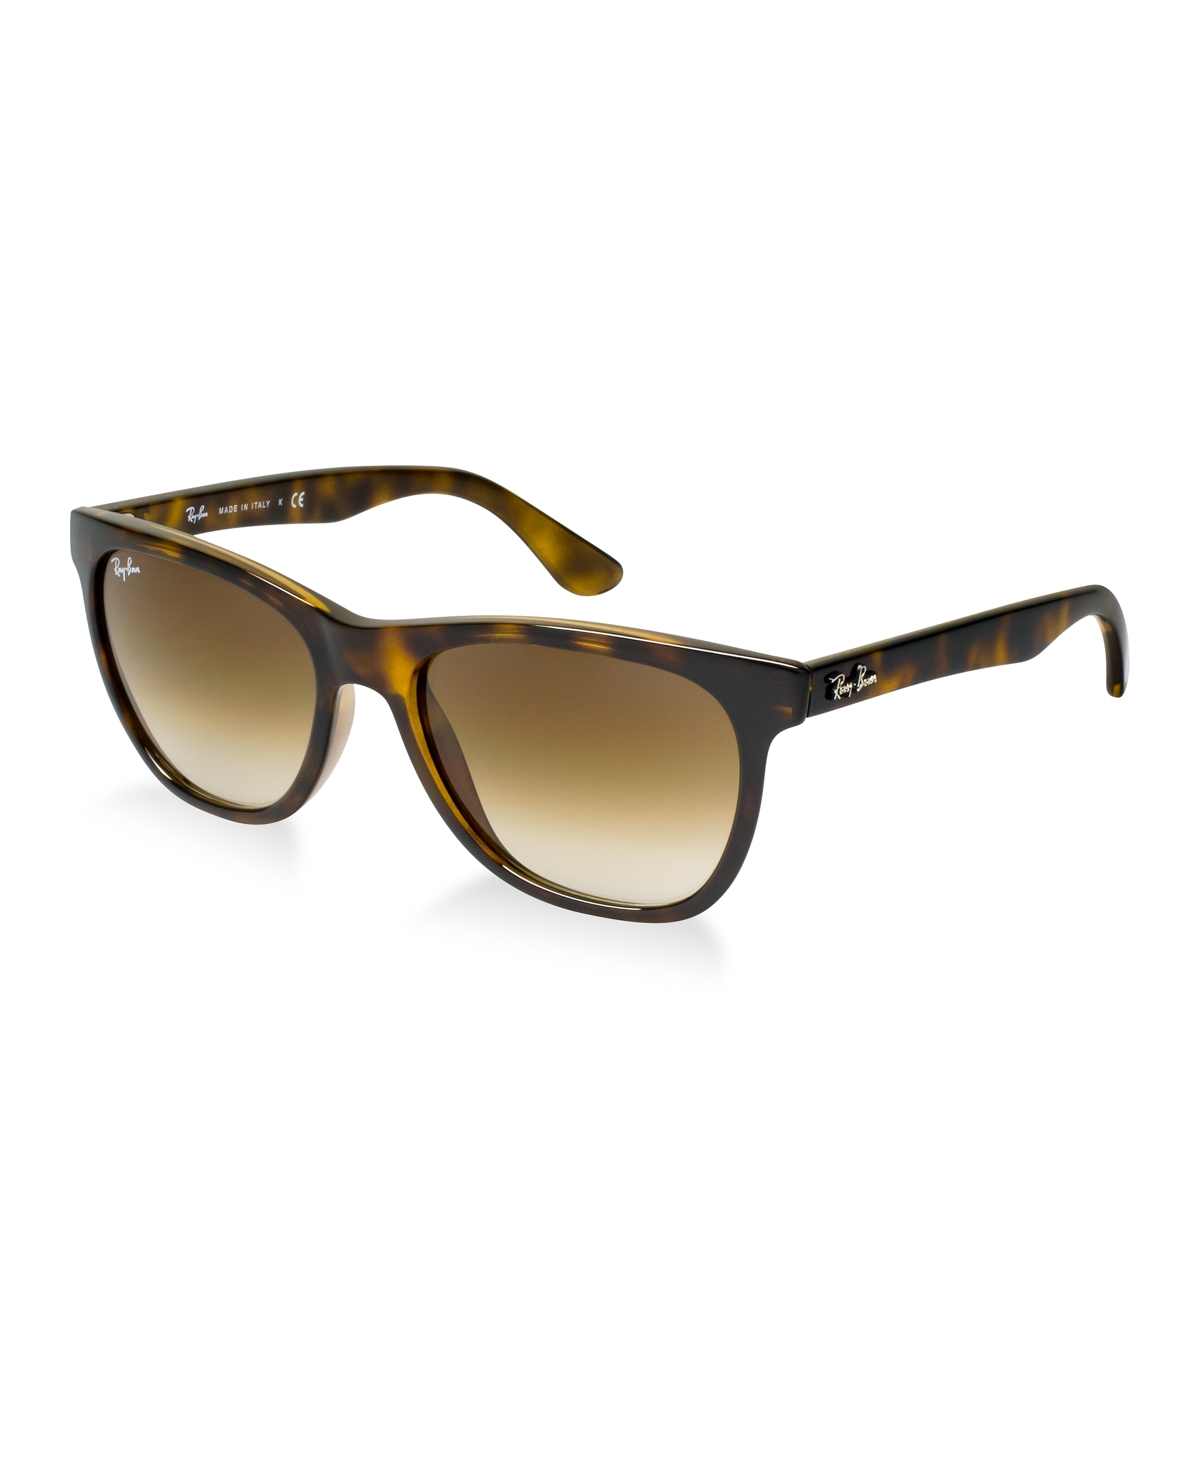 Sunglasses, RB4184 - Brown/Brown